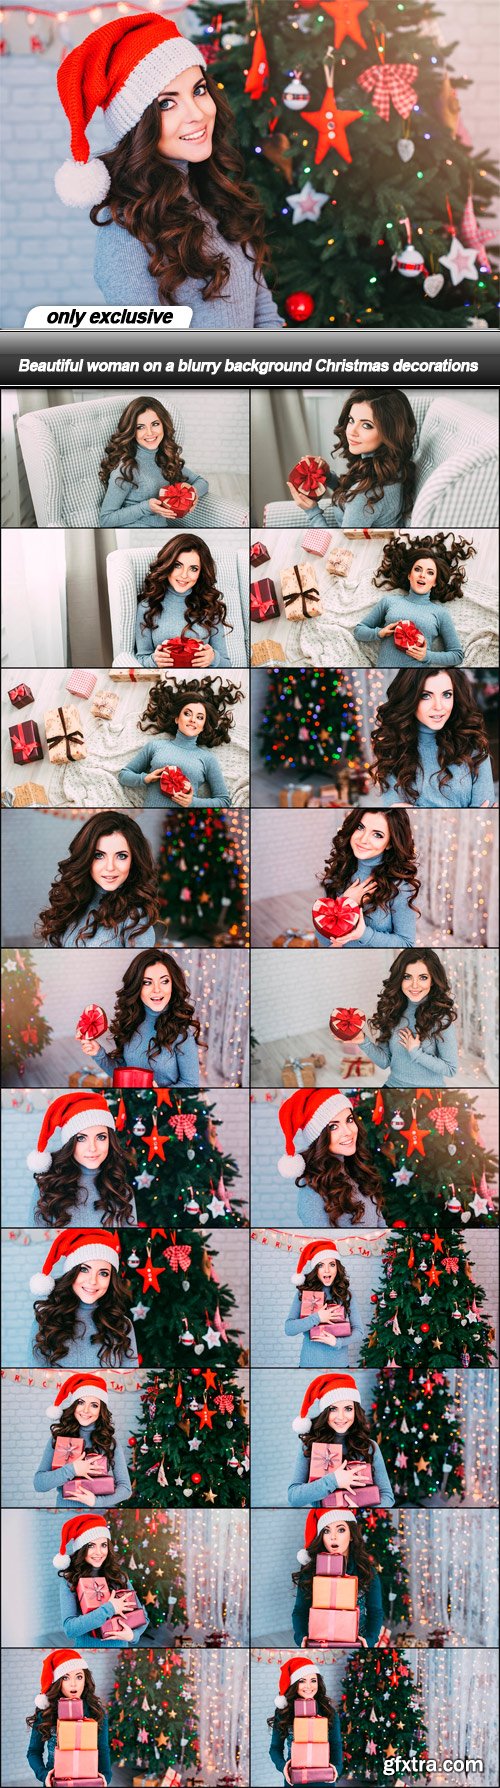 Beautiful woman on a blurry background Christmas decorations - 20 UHQ JPEG